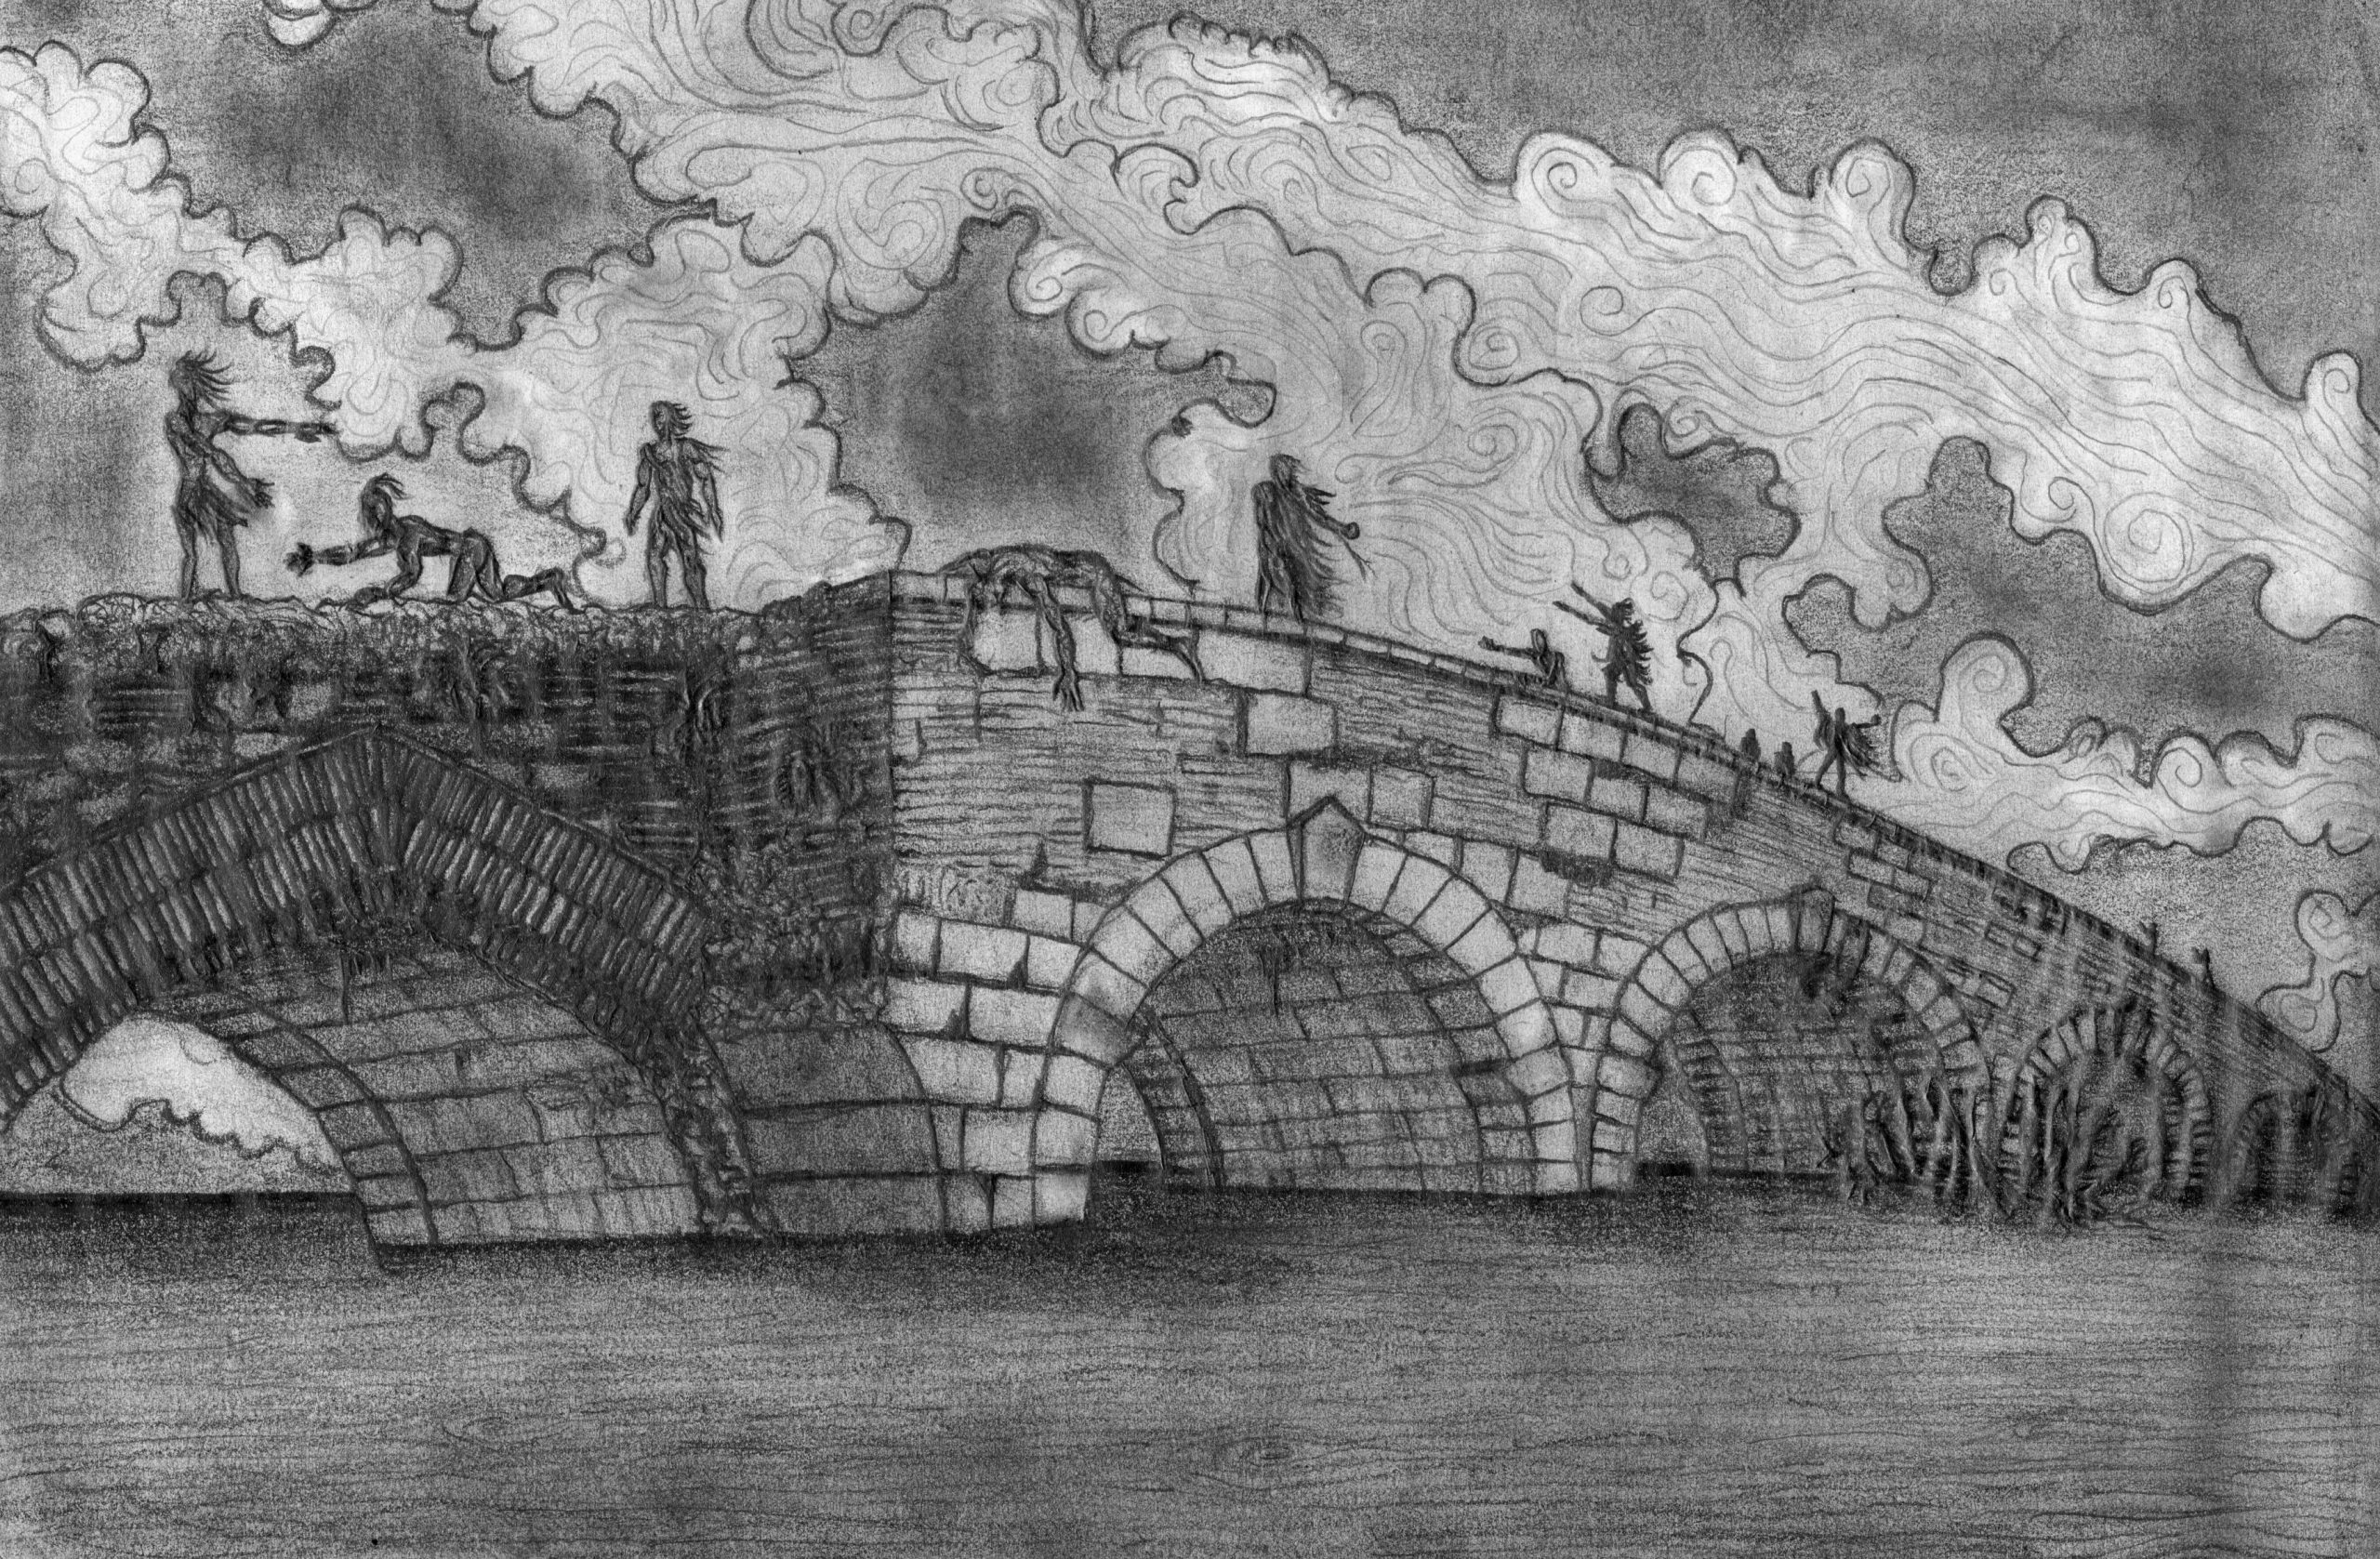 The Sorrows: The Bridge of Dream on river Rhoyne